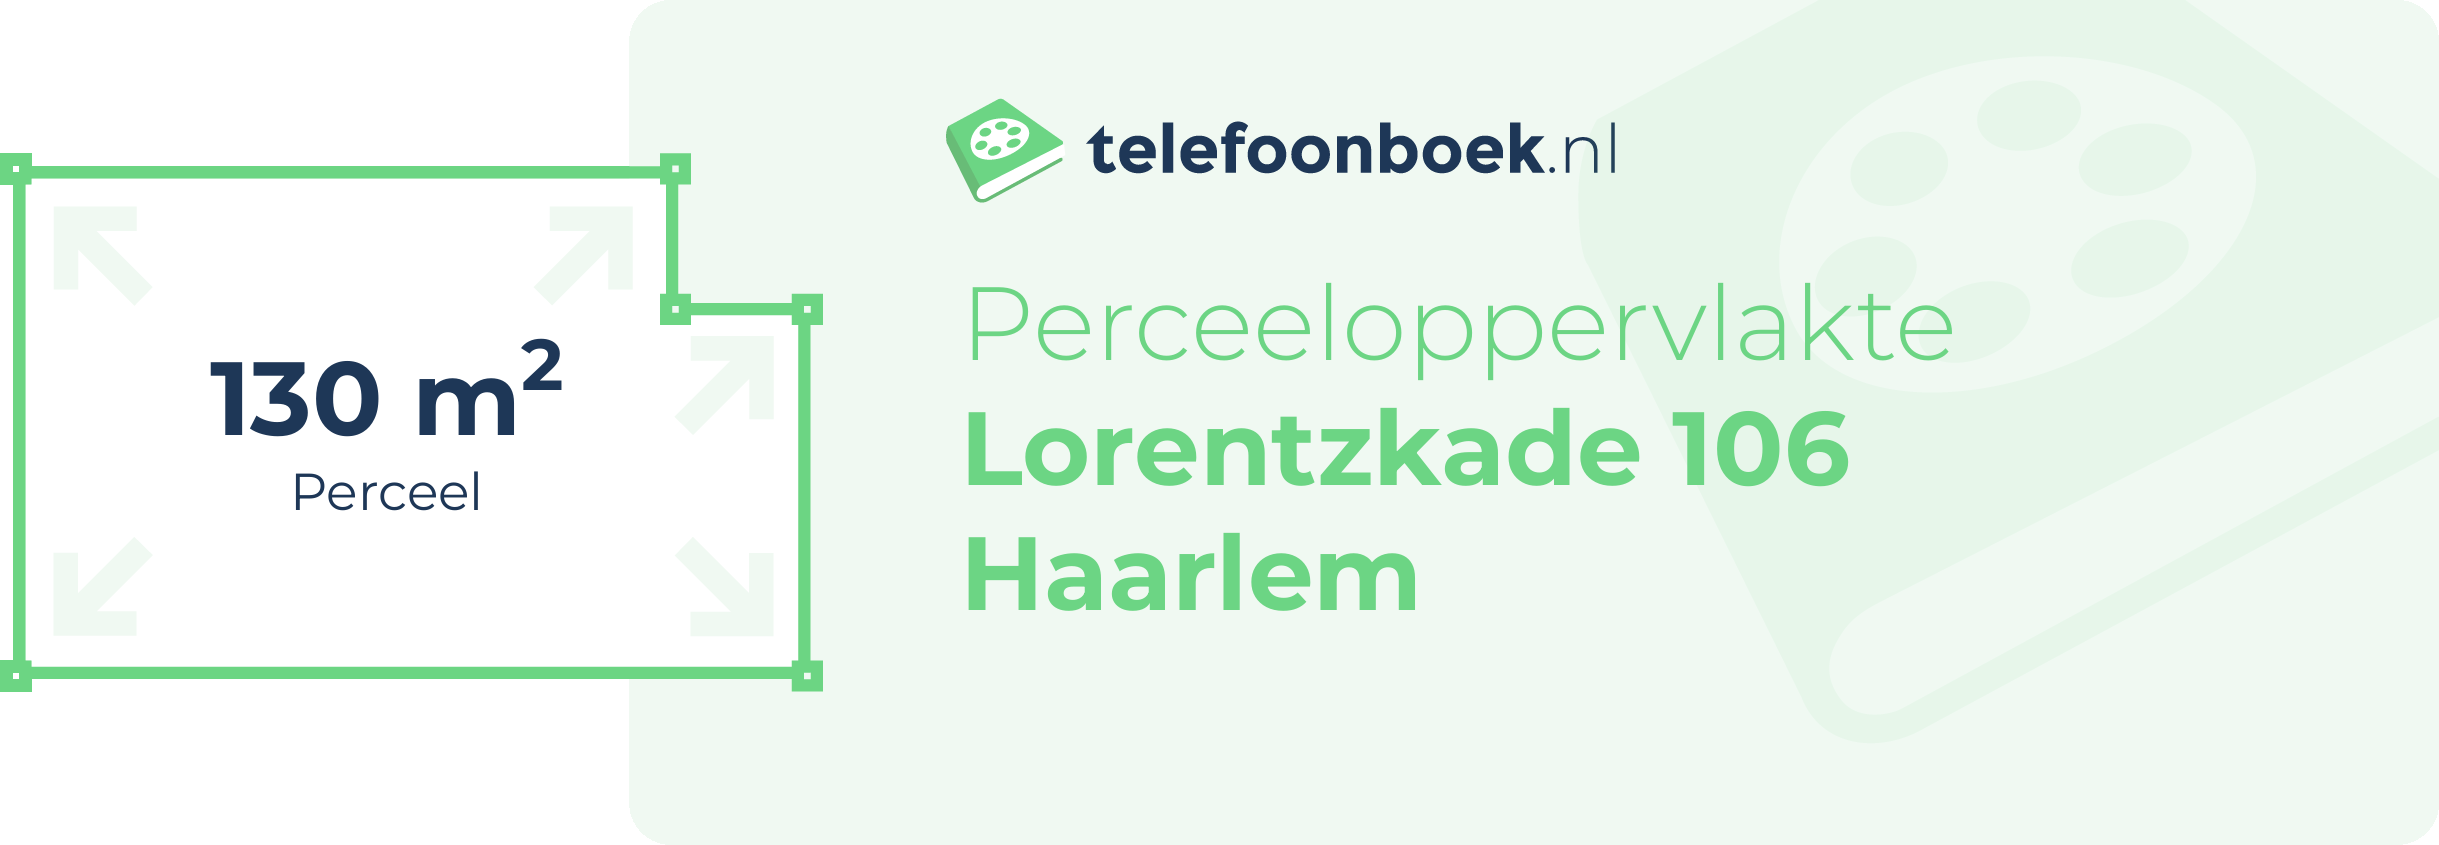 Perceeloppervlakte Lorentzkade 106 Haarlem